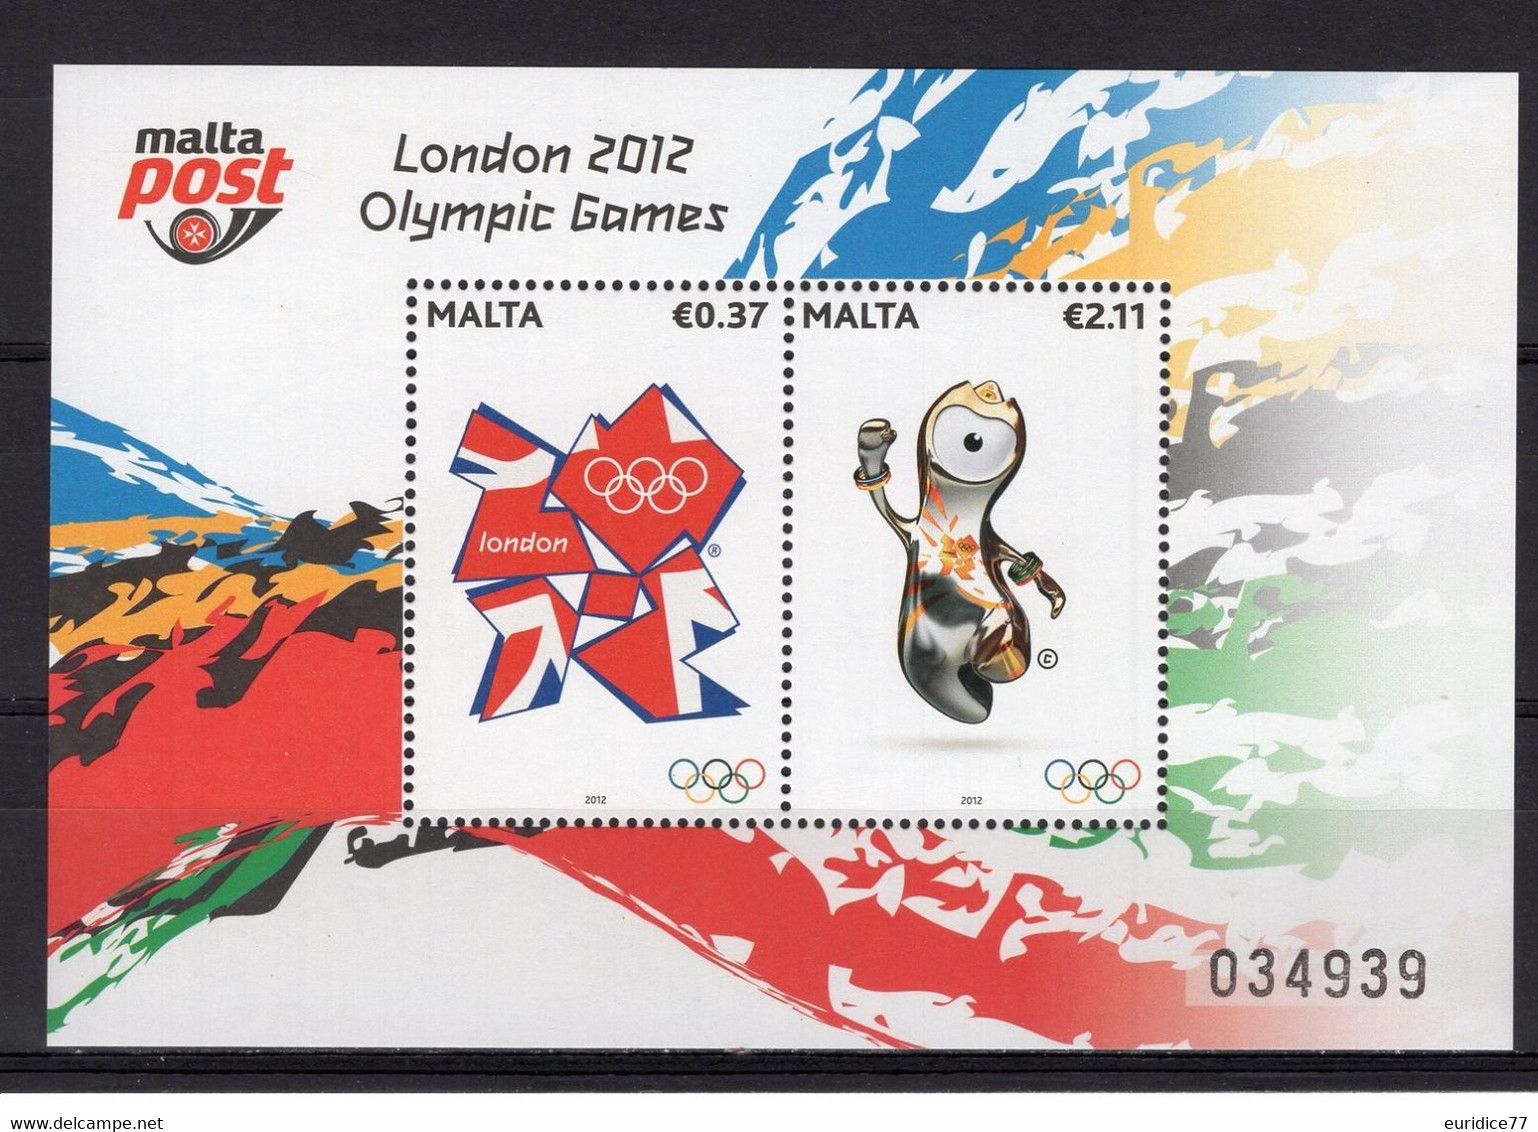 Malta 2012 - London Olympic Games 2012 Souvenir Sheet Mnh - Sommer 2012: London